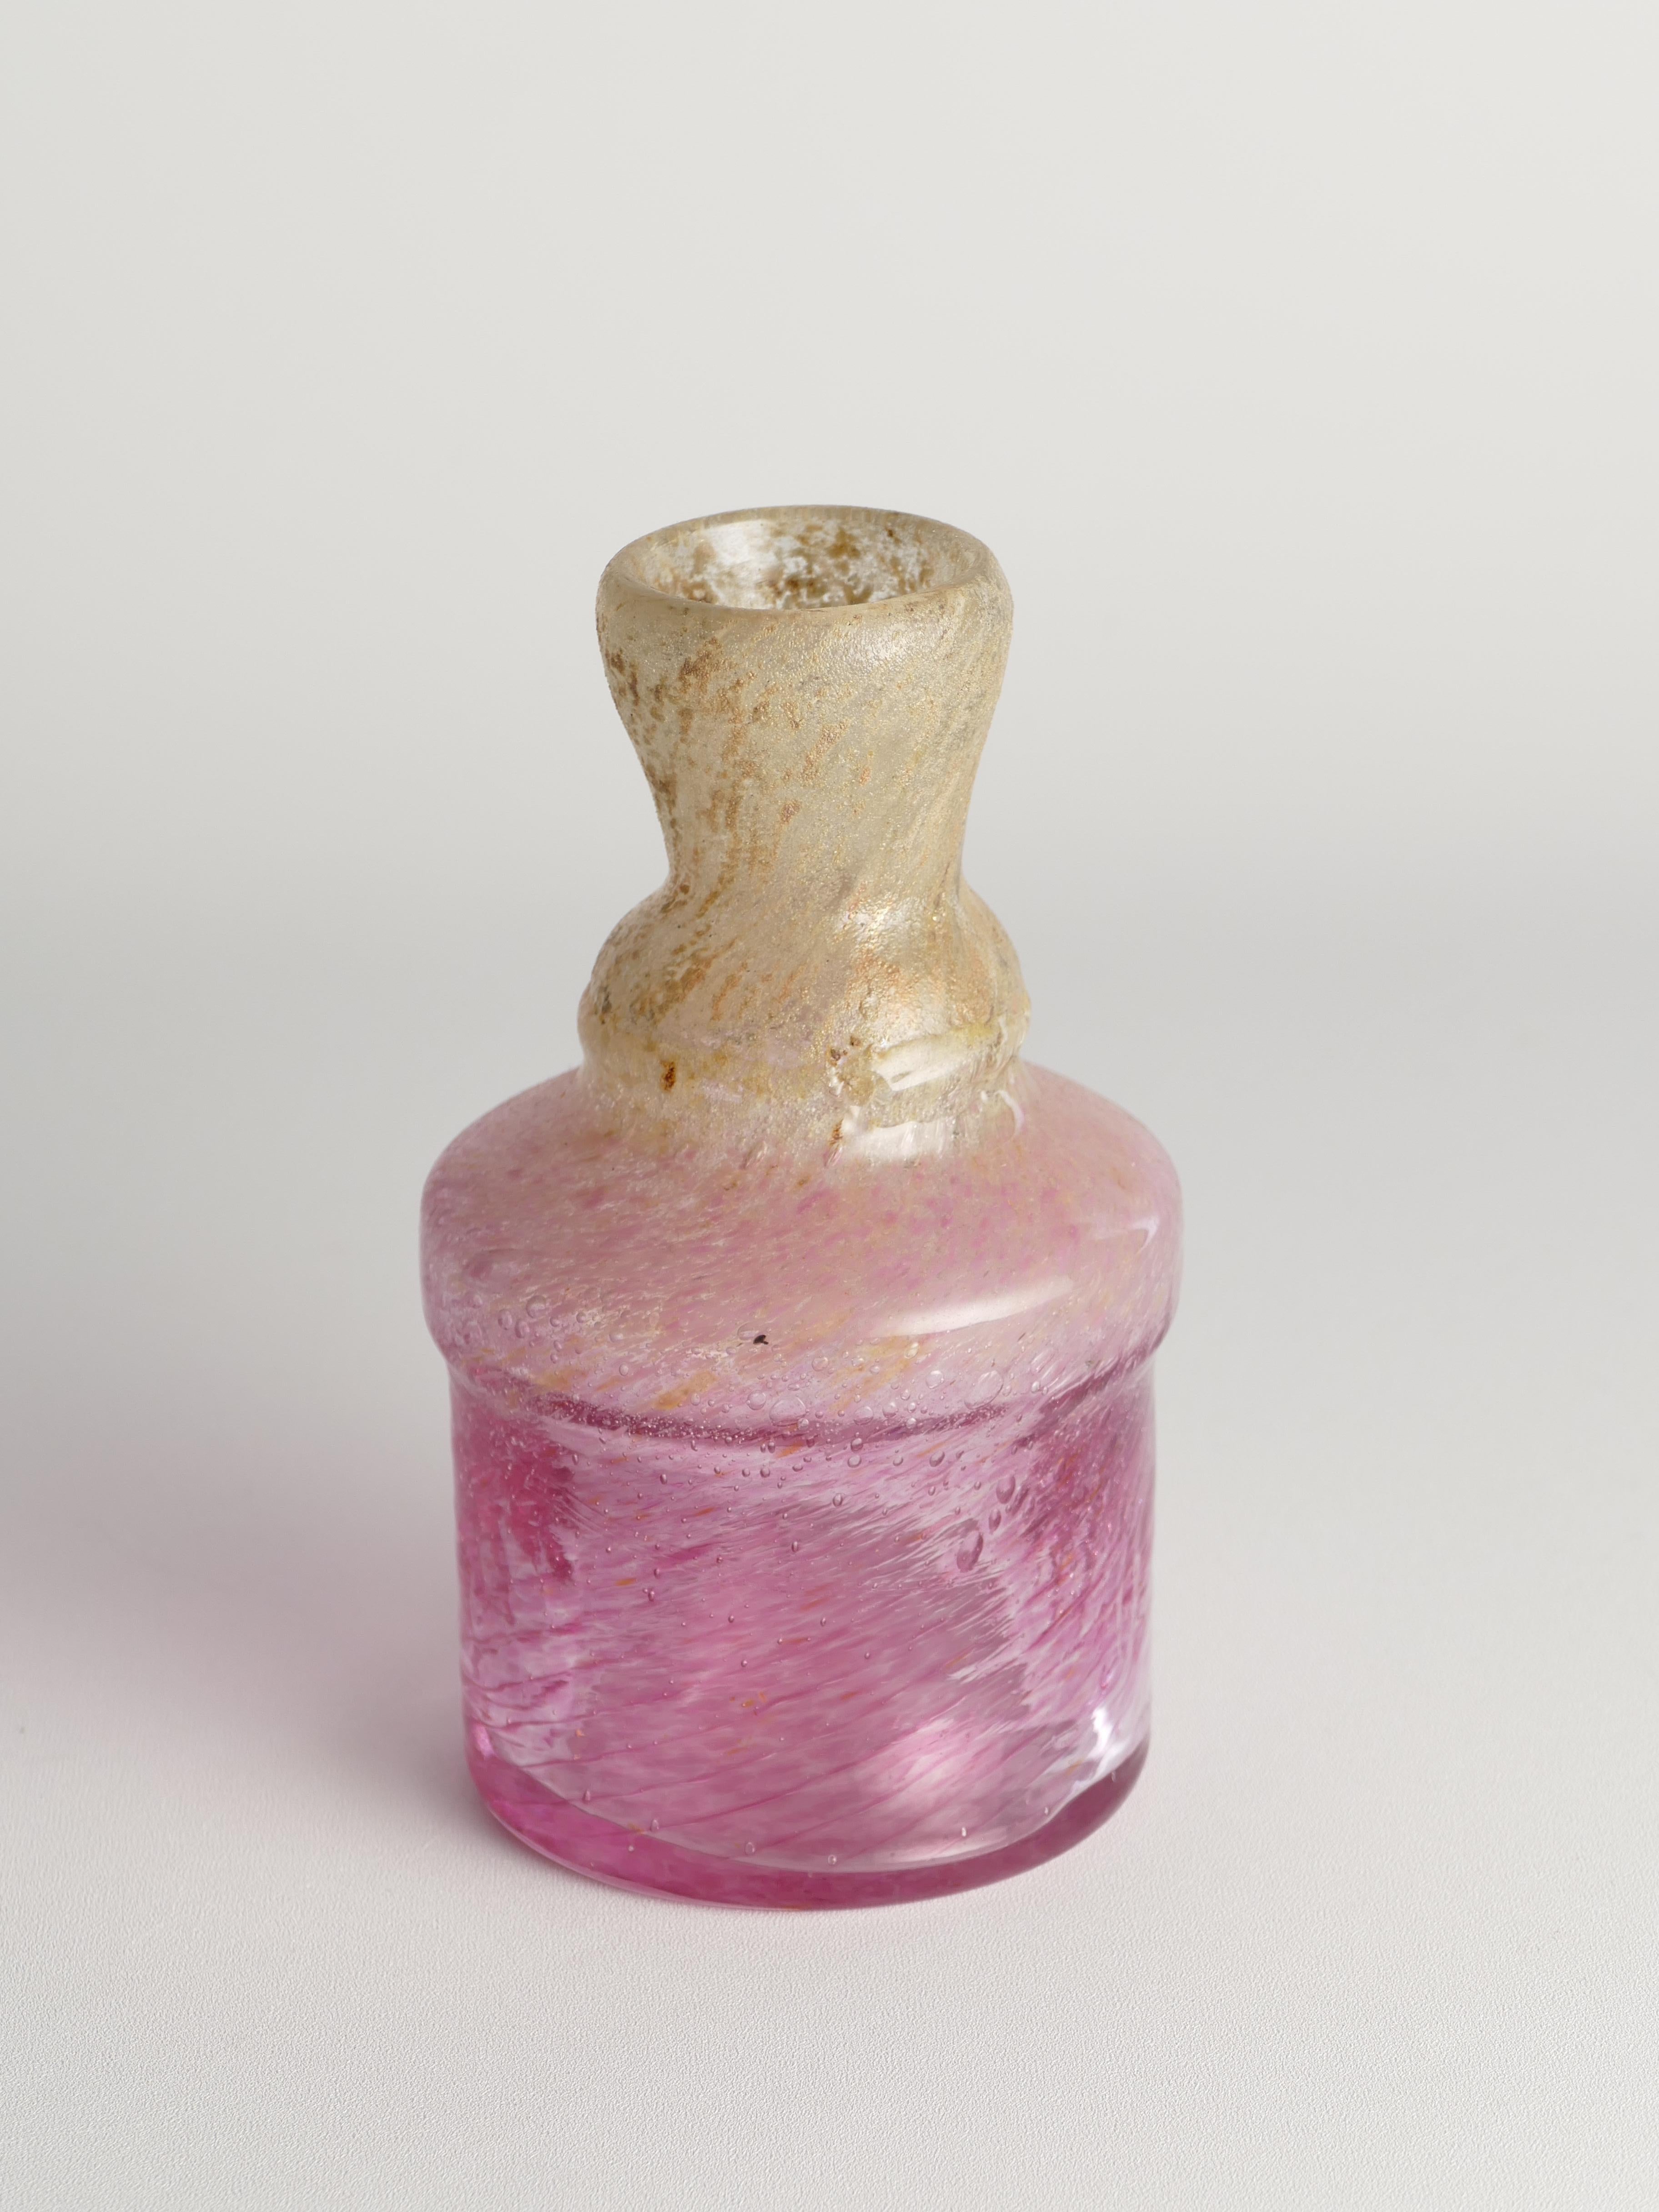 Unique Bubblegum Pink and Yellow Art Glass Vase by Milan Vobruba, Sweden 1980s For Sale 6